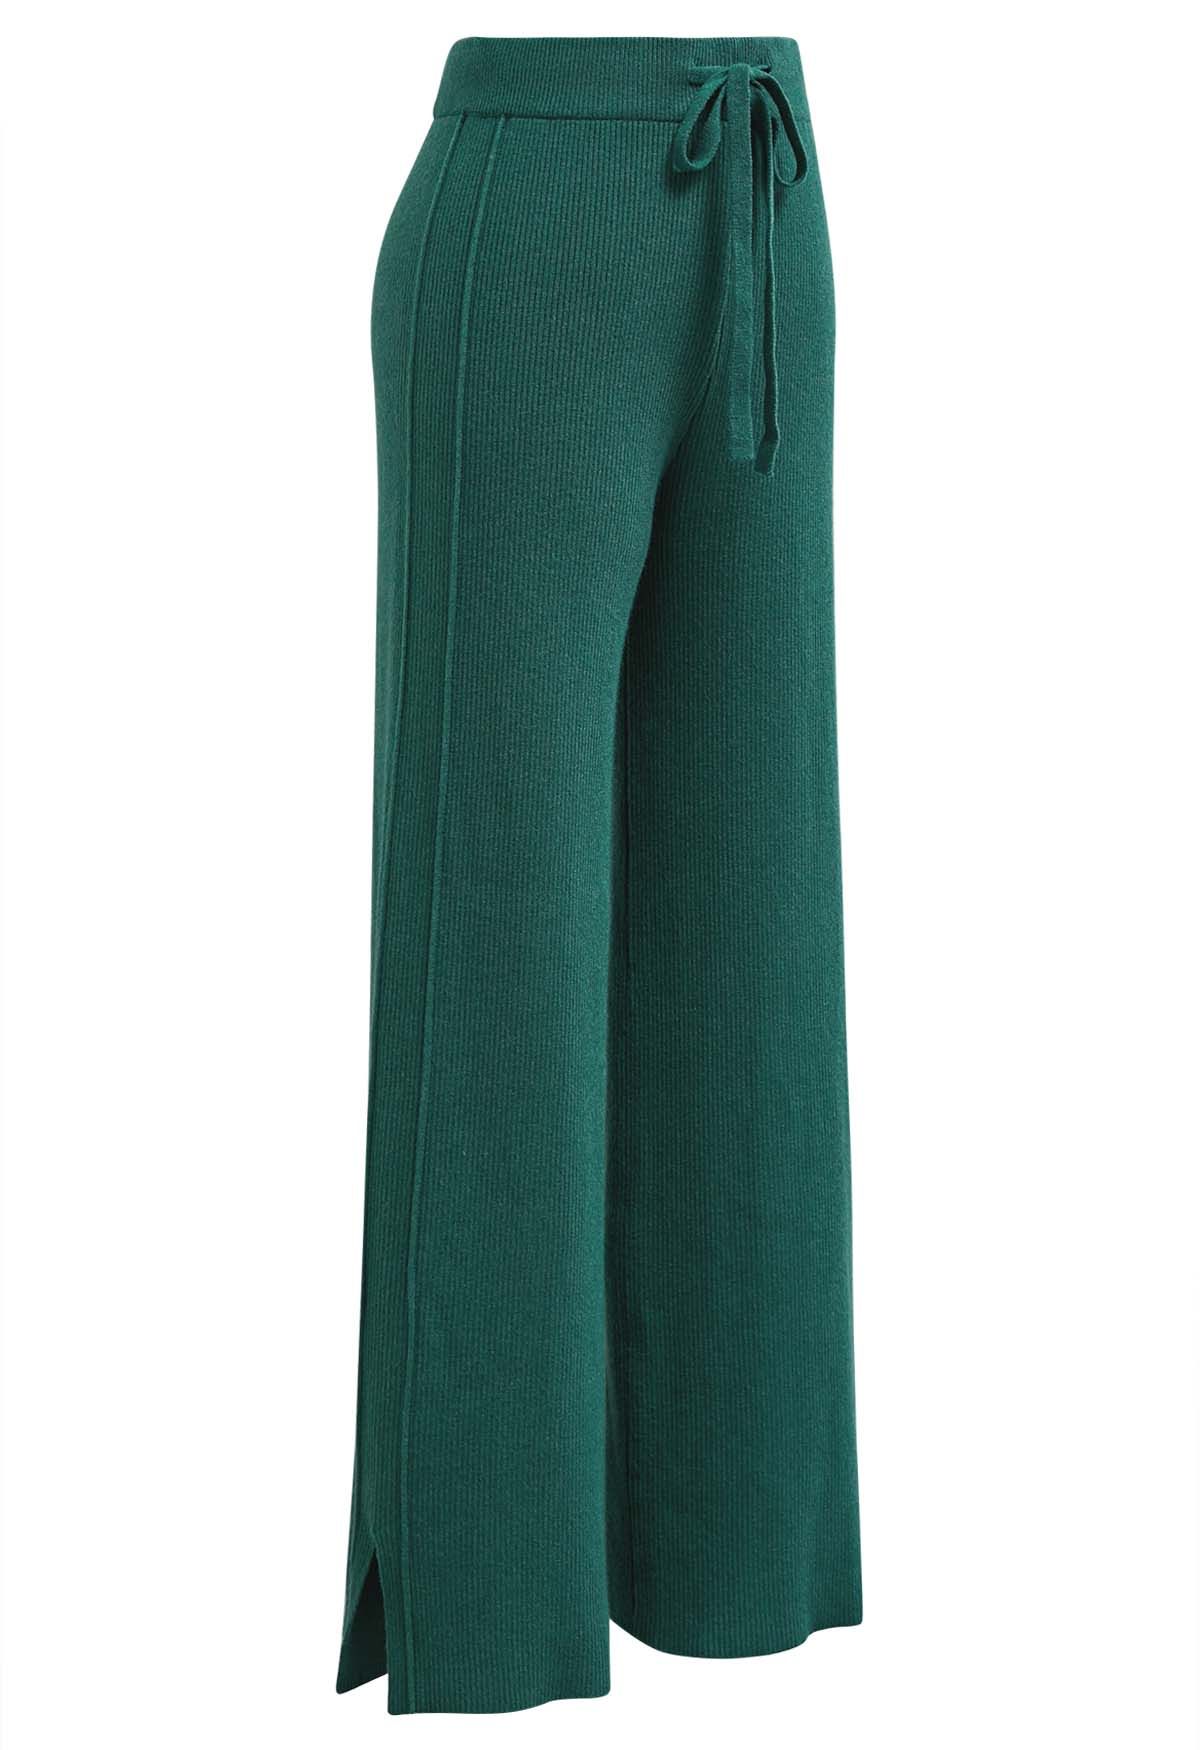 Drawstring Waist Side Slit Knit Pants in Dark Green